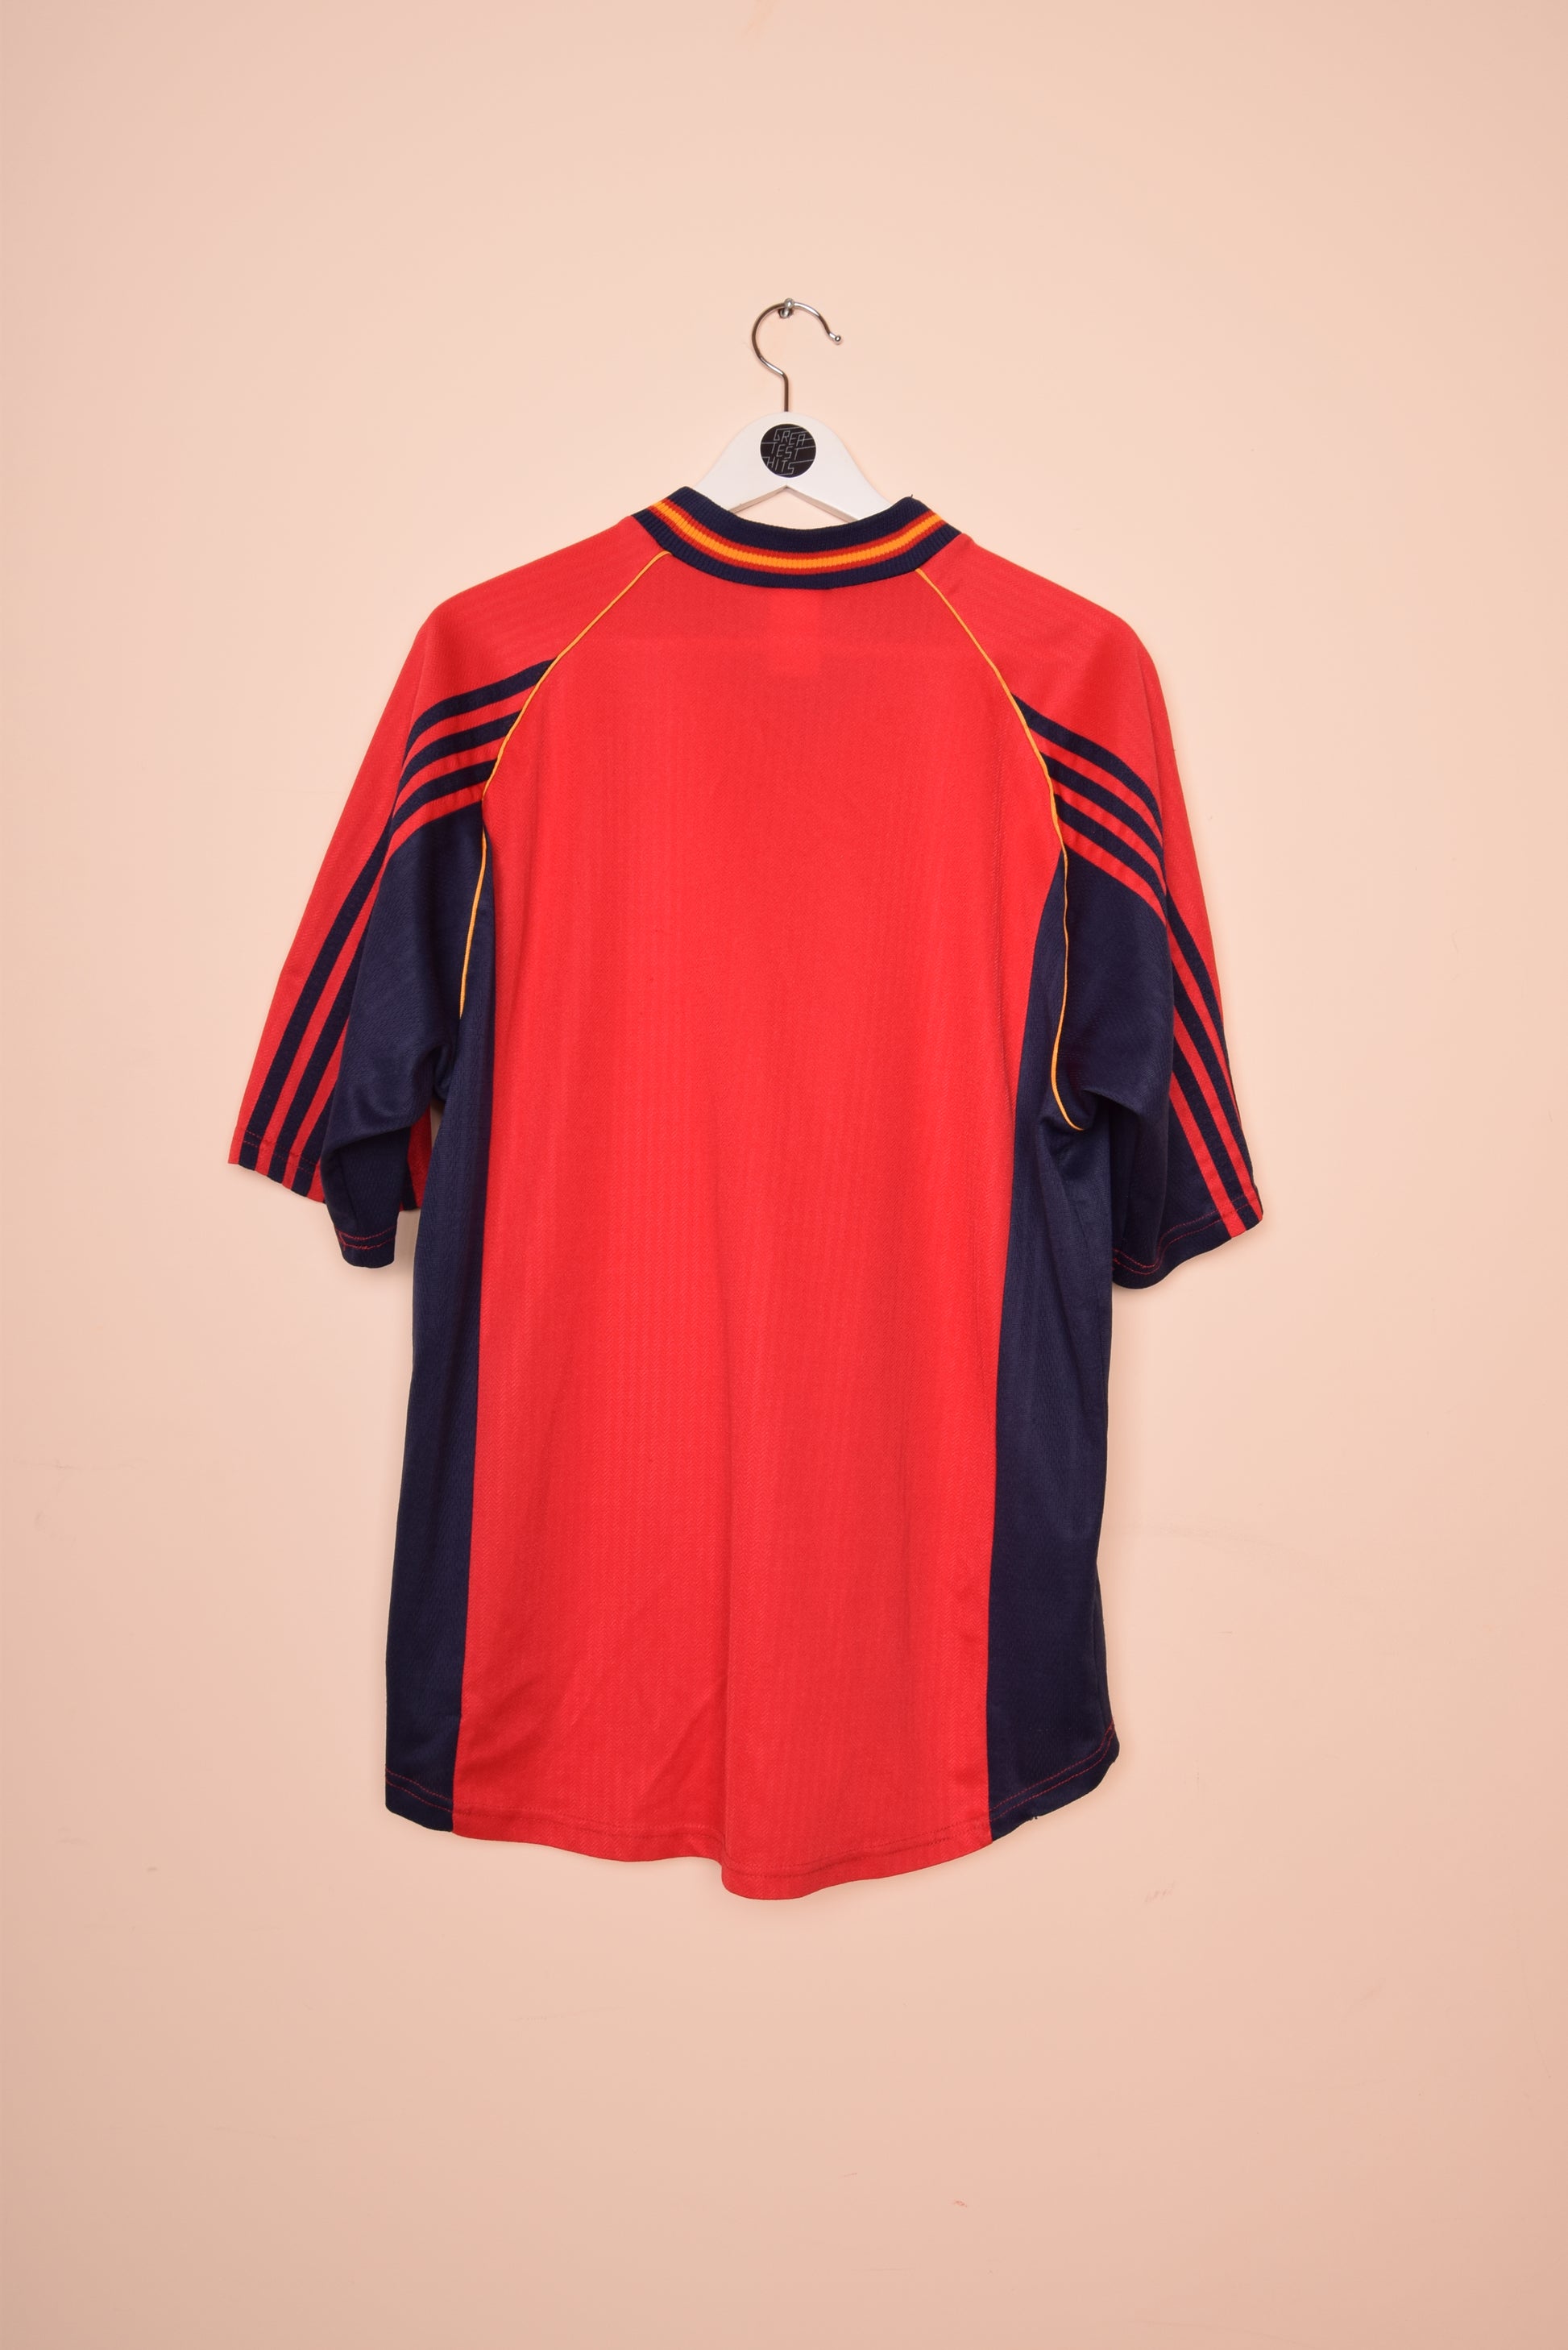 Vintage Spain 1998 - 1999 Adidas Home Football Shirt